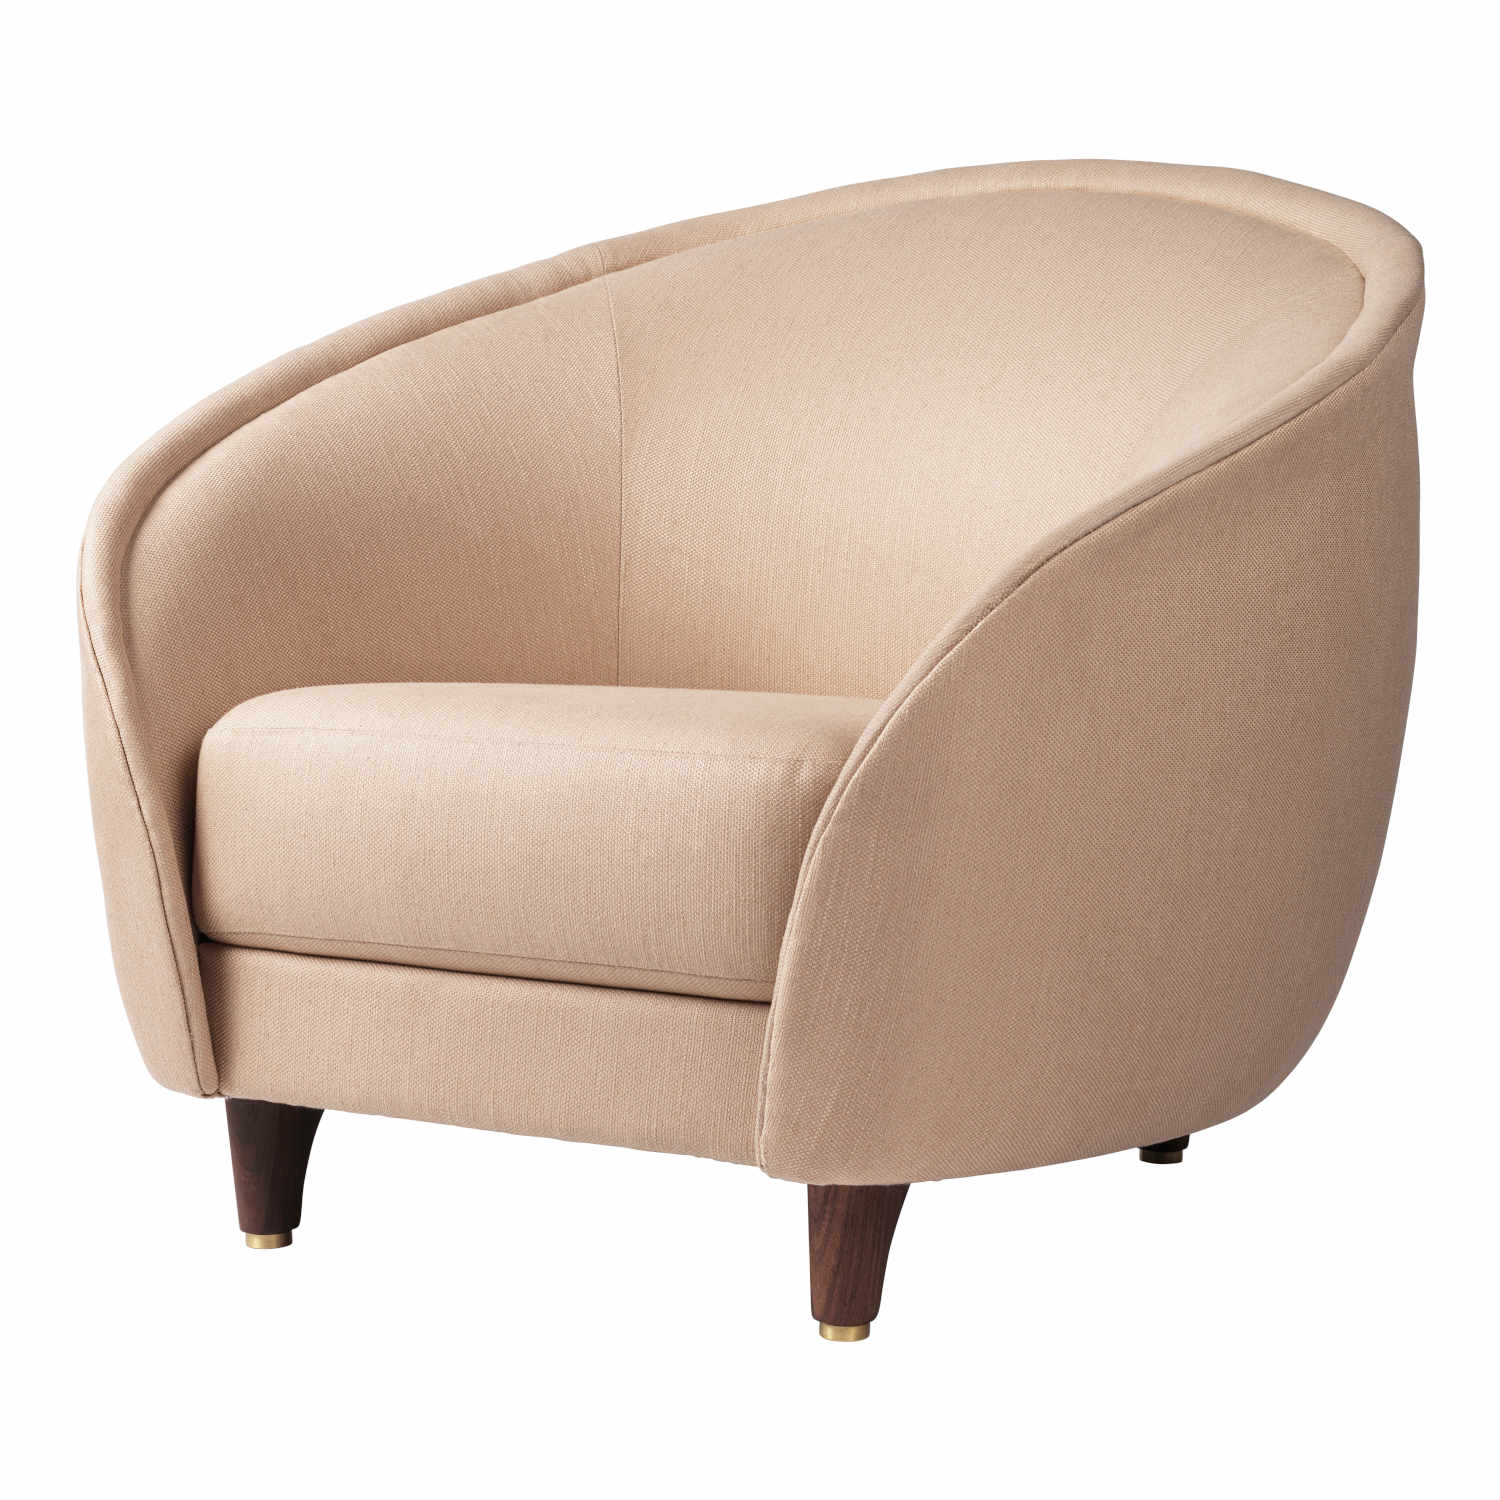 Revers Lounge Chair Sessel, Bezug kvadrat remix 0543 stoff, Untergestell Wood Base american walnut (geölt) von GUBI